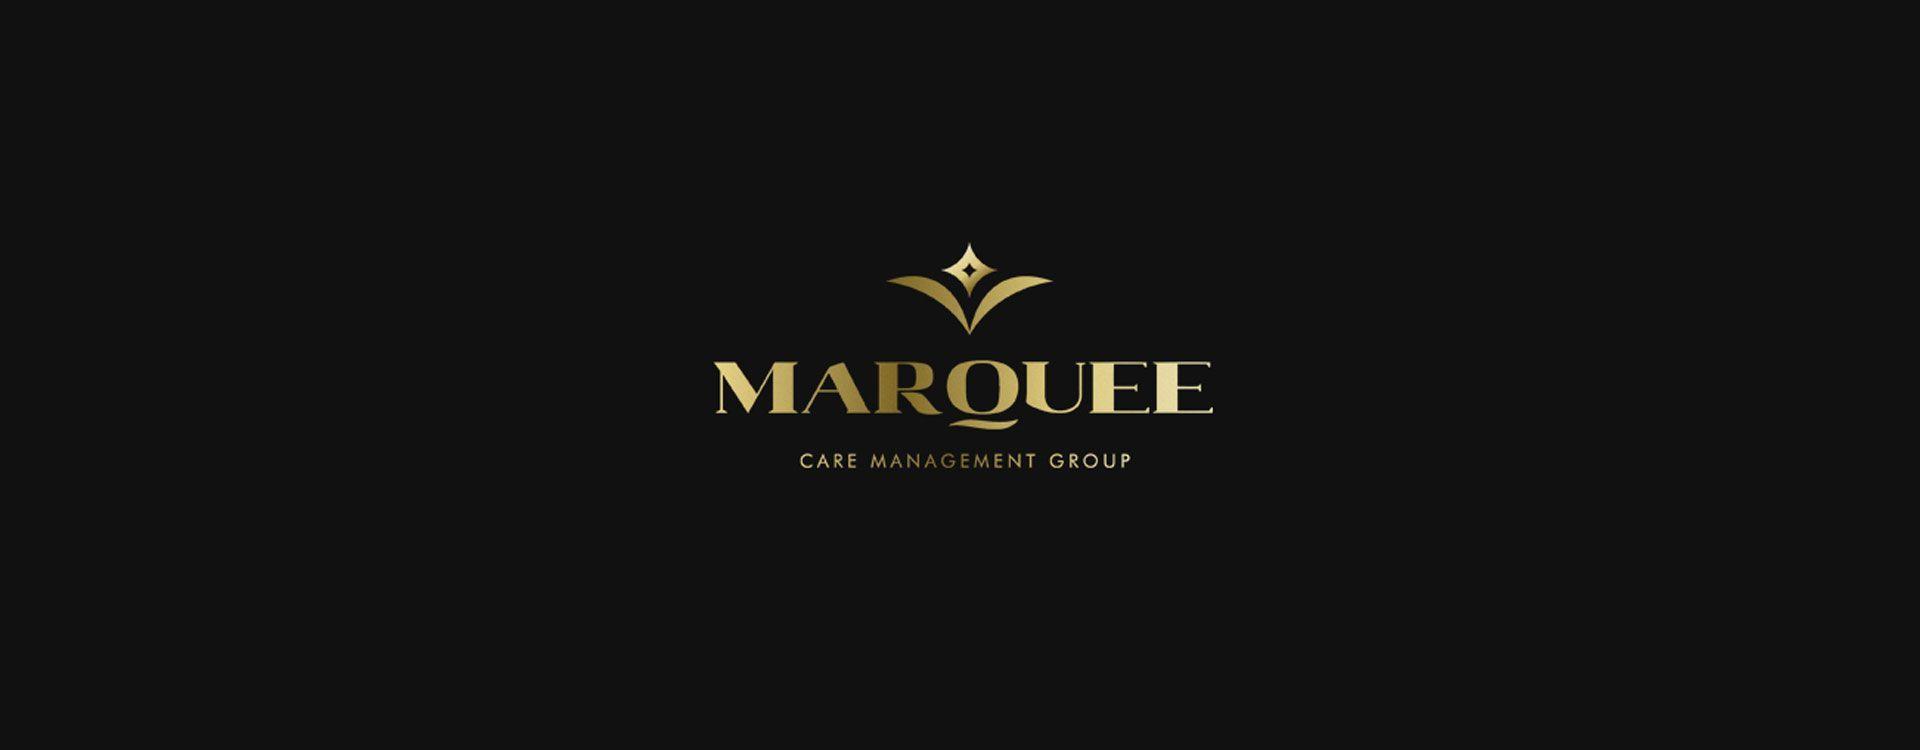 Marquee Logo - Marquee | Fivestar Logo Branding Agency - Best Logo and Web Design ...